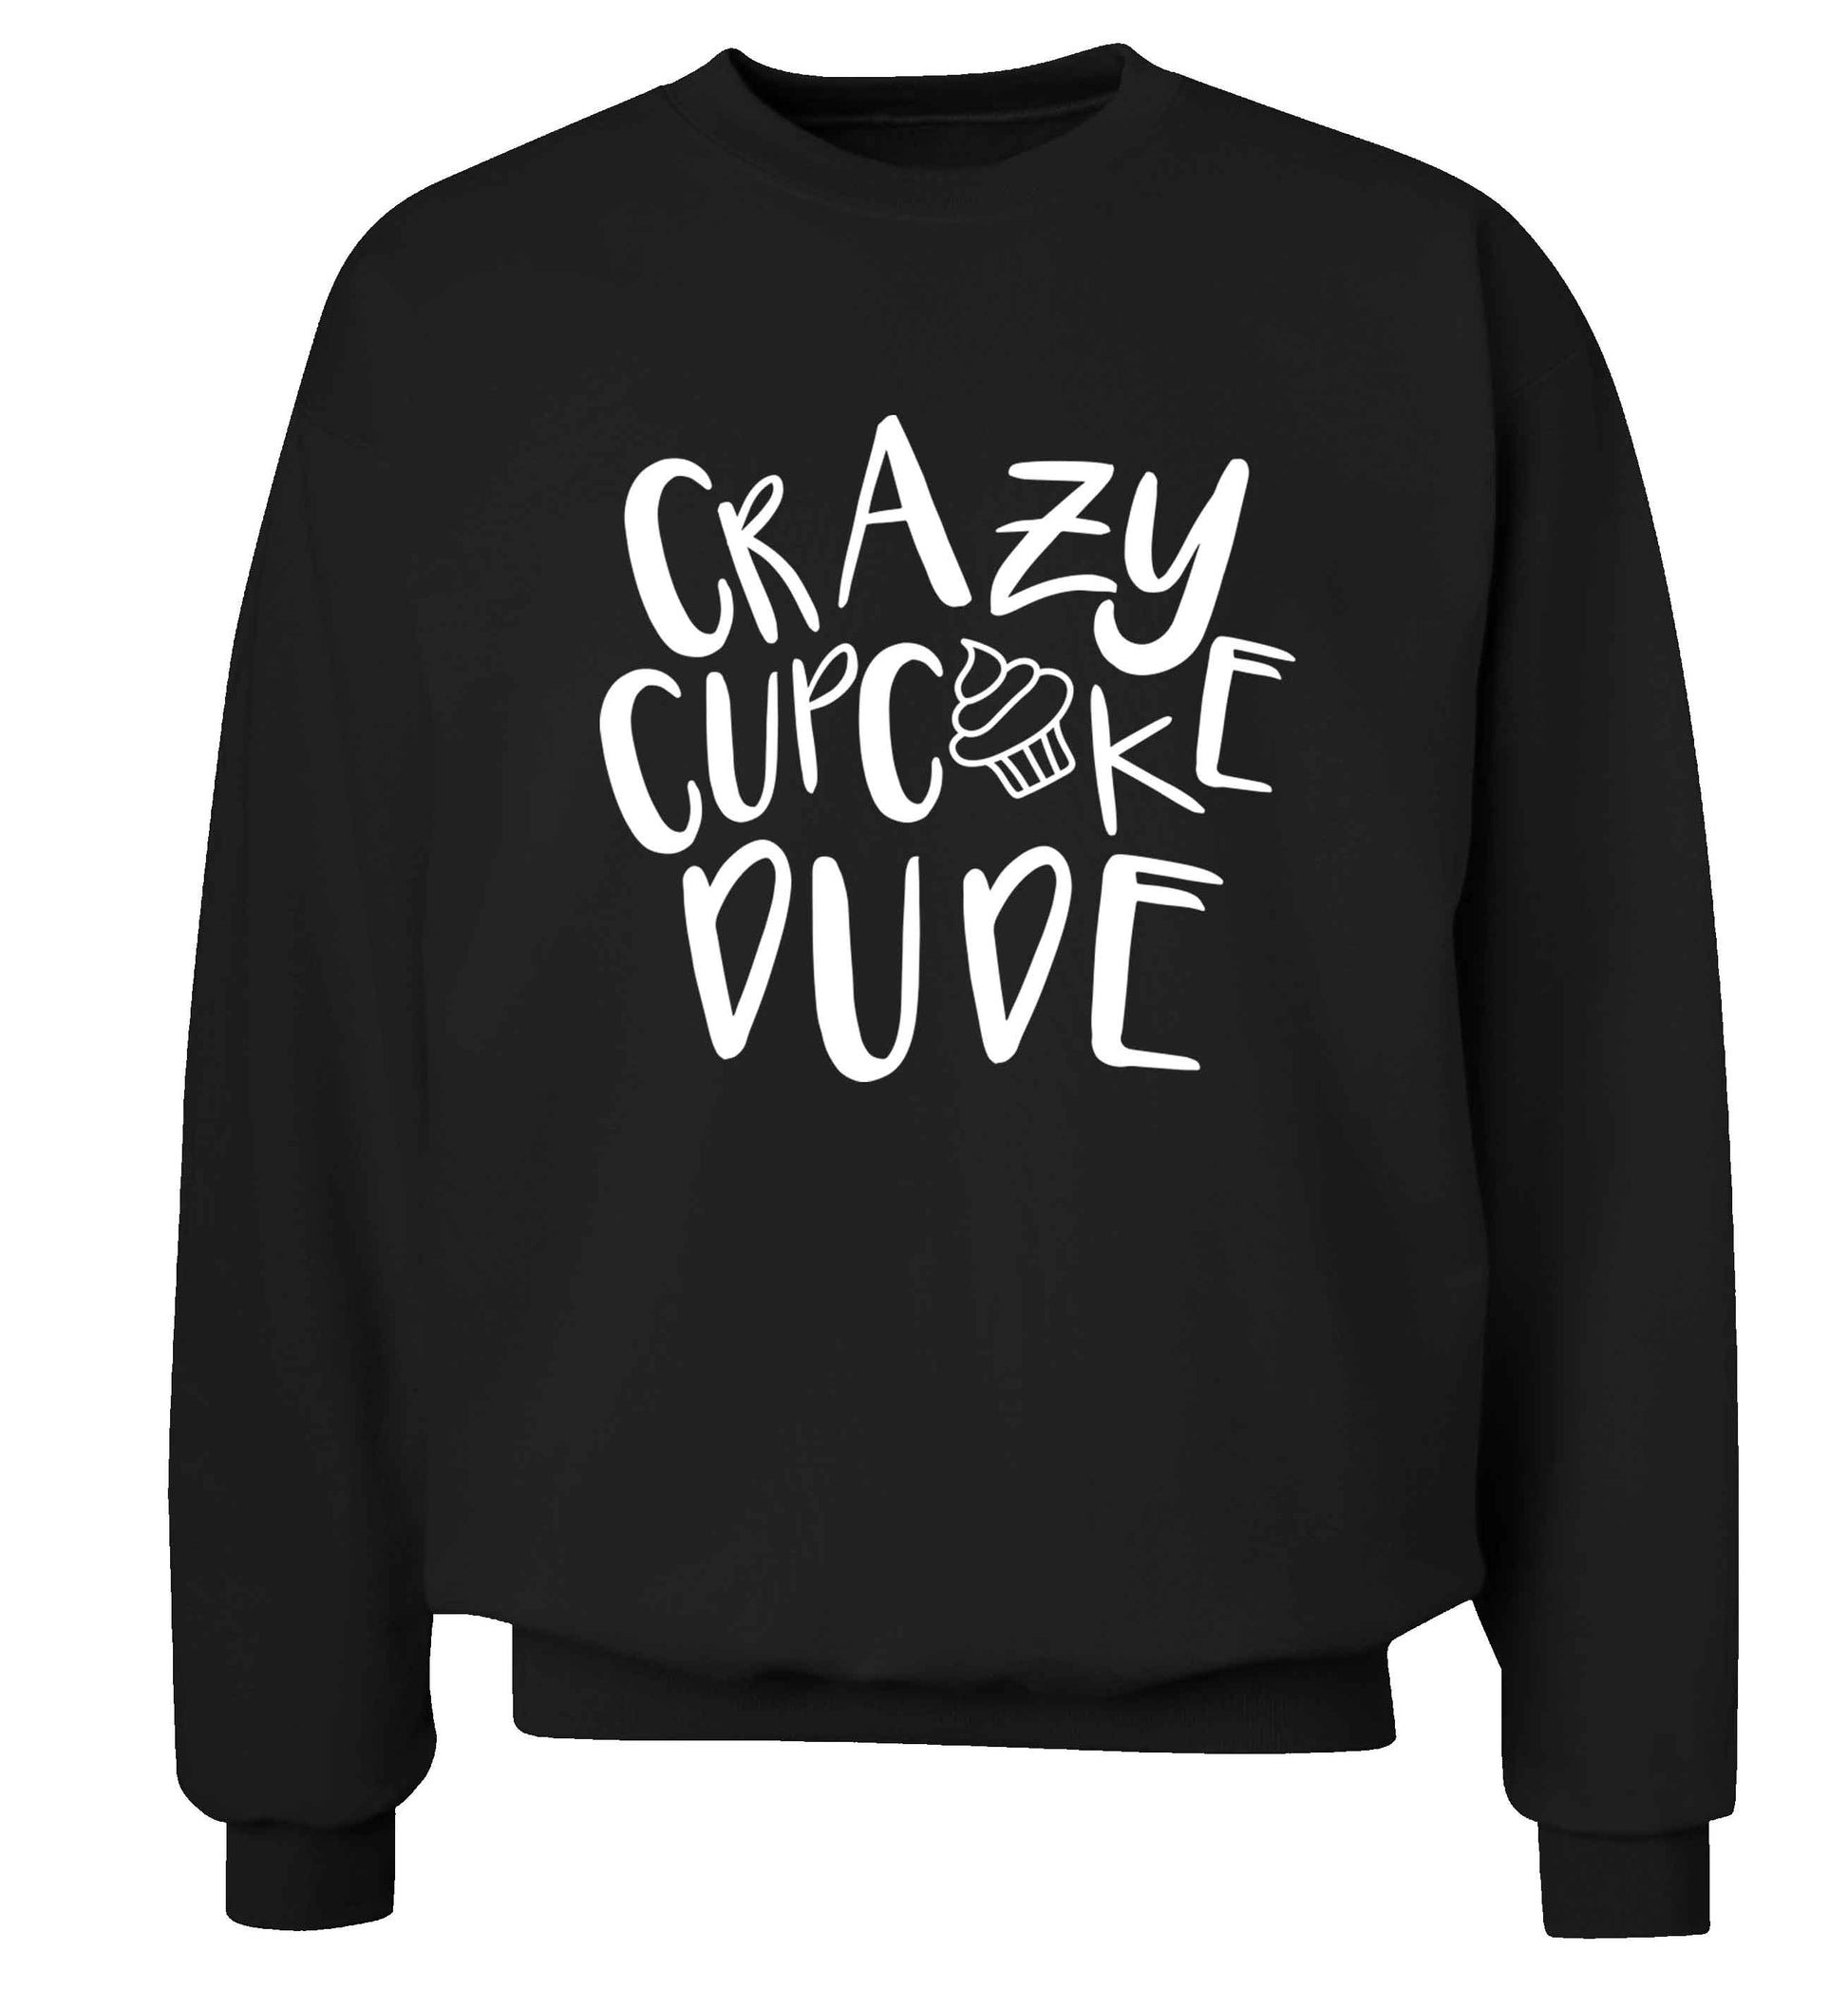 Crazy cupcake dude Adult's unisex black Sweater 2XL